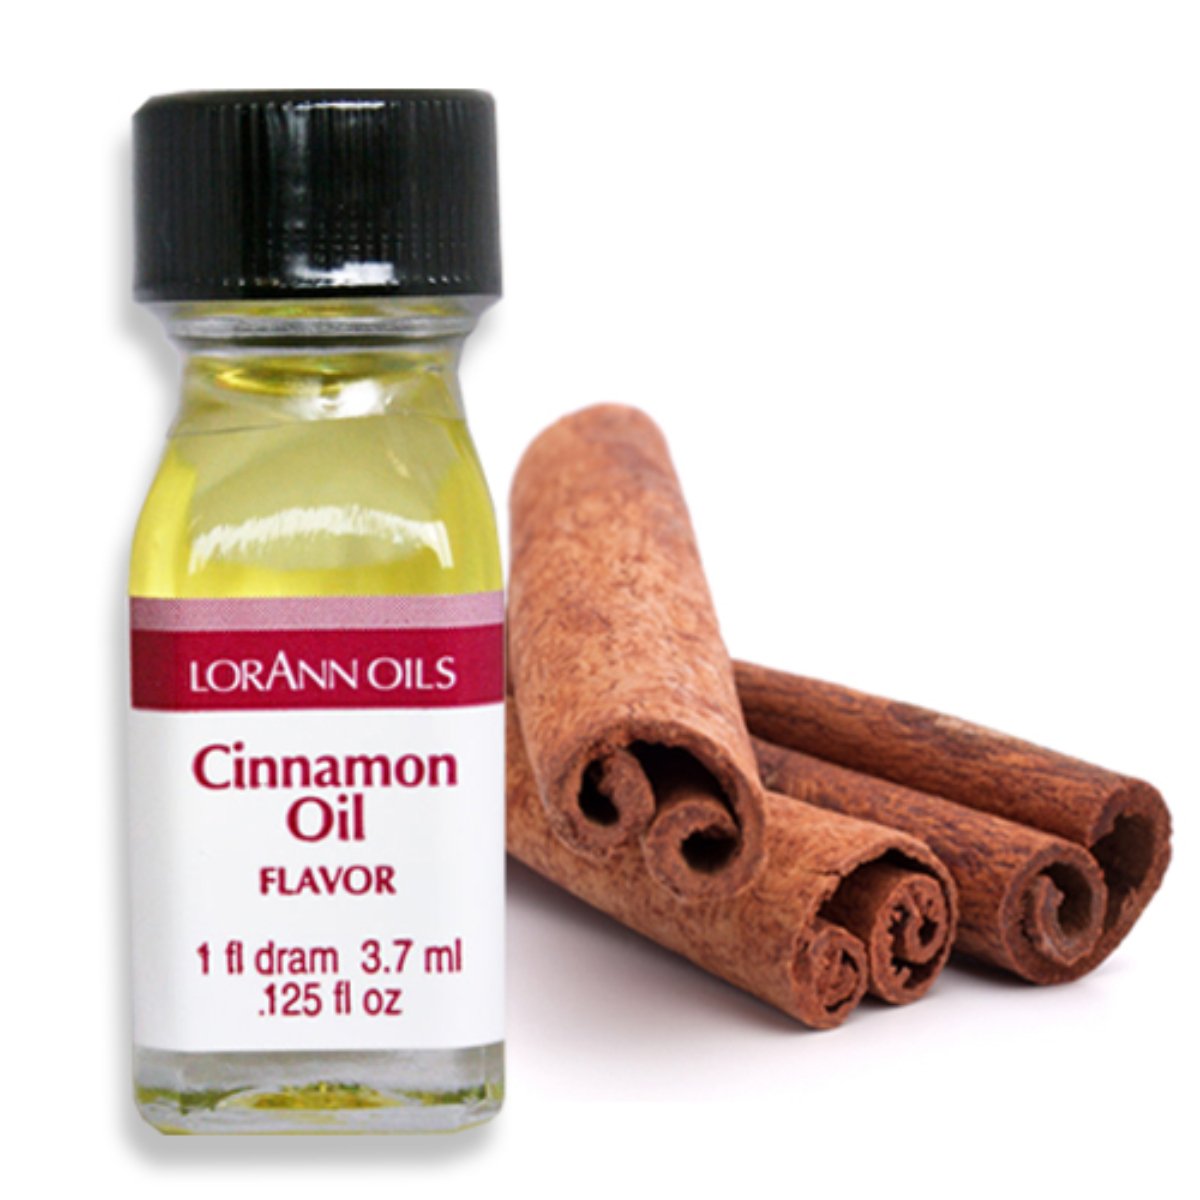 Cinnamon Oil Flavor 1 Dram - Bake Supply Plus